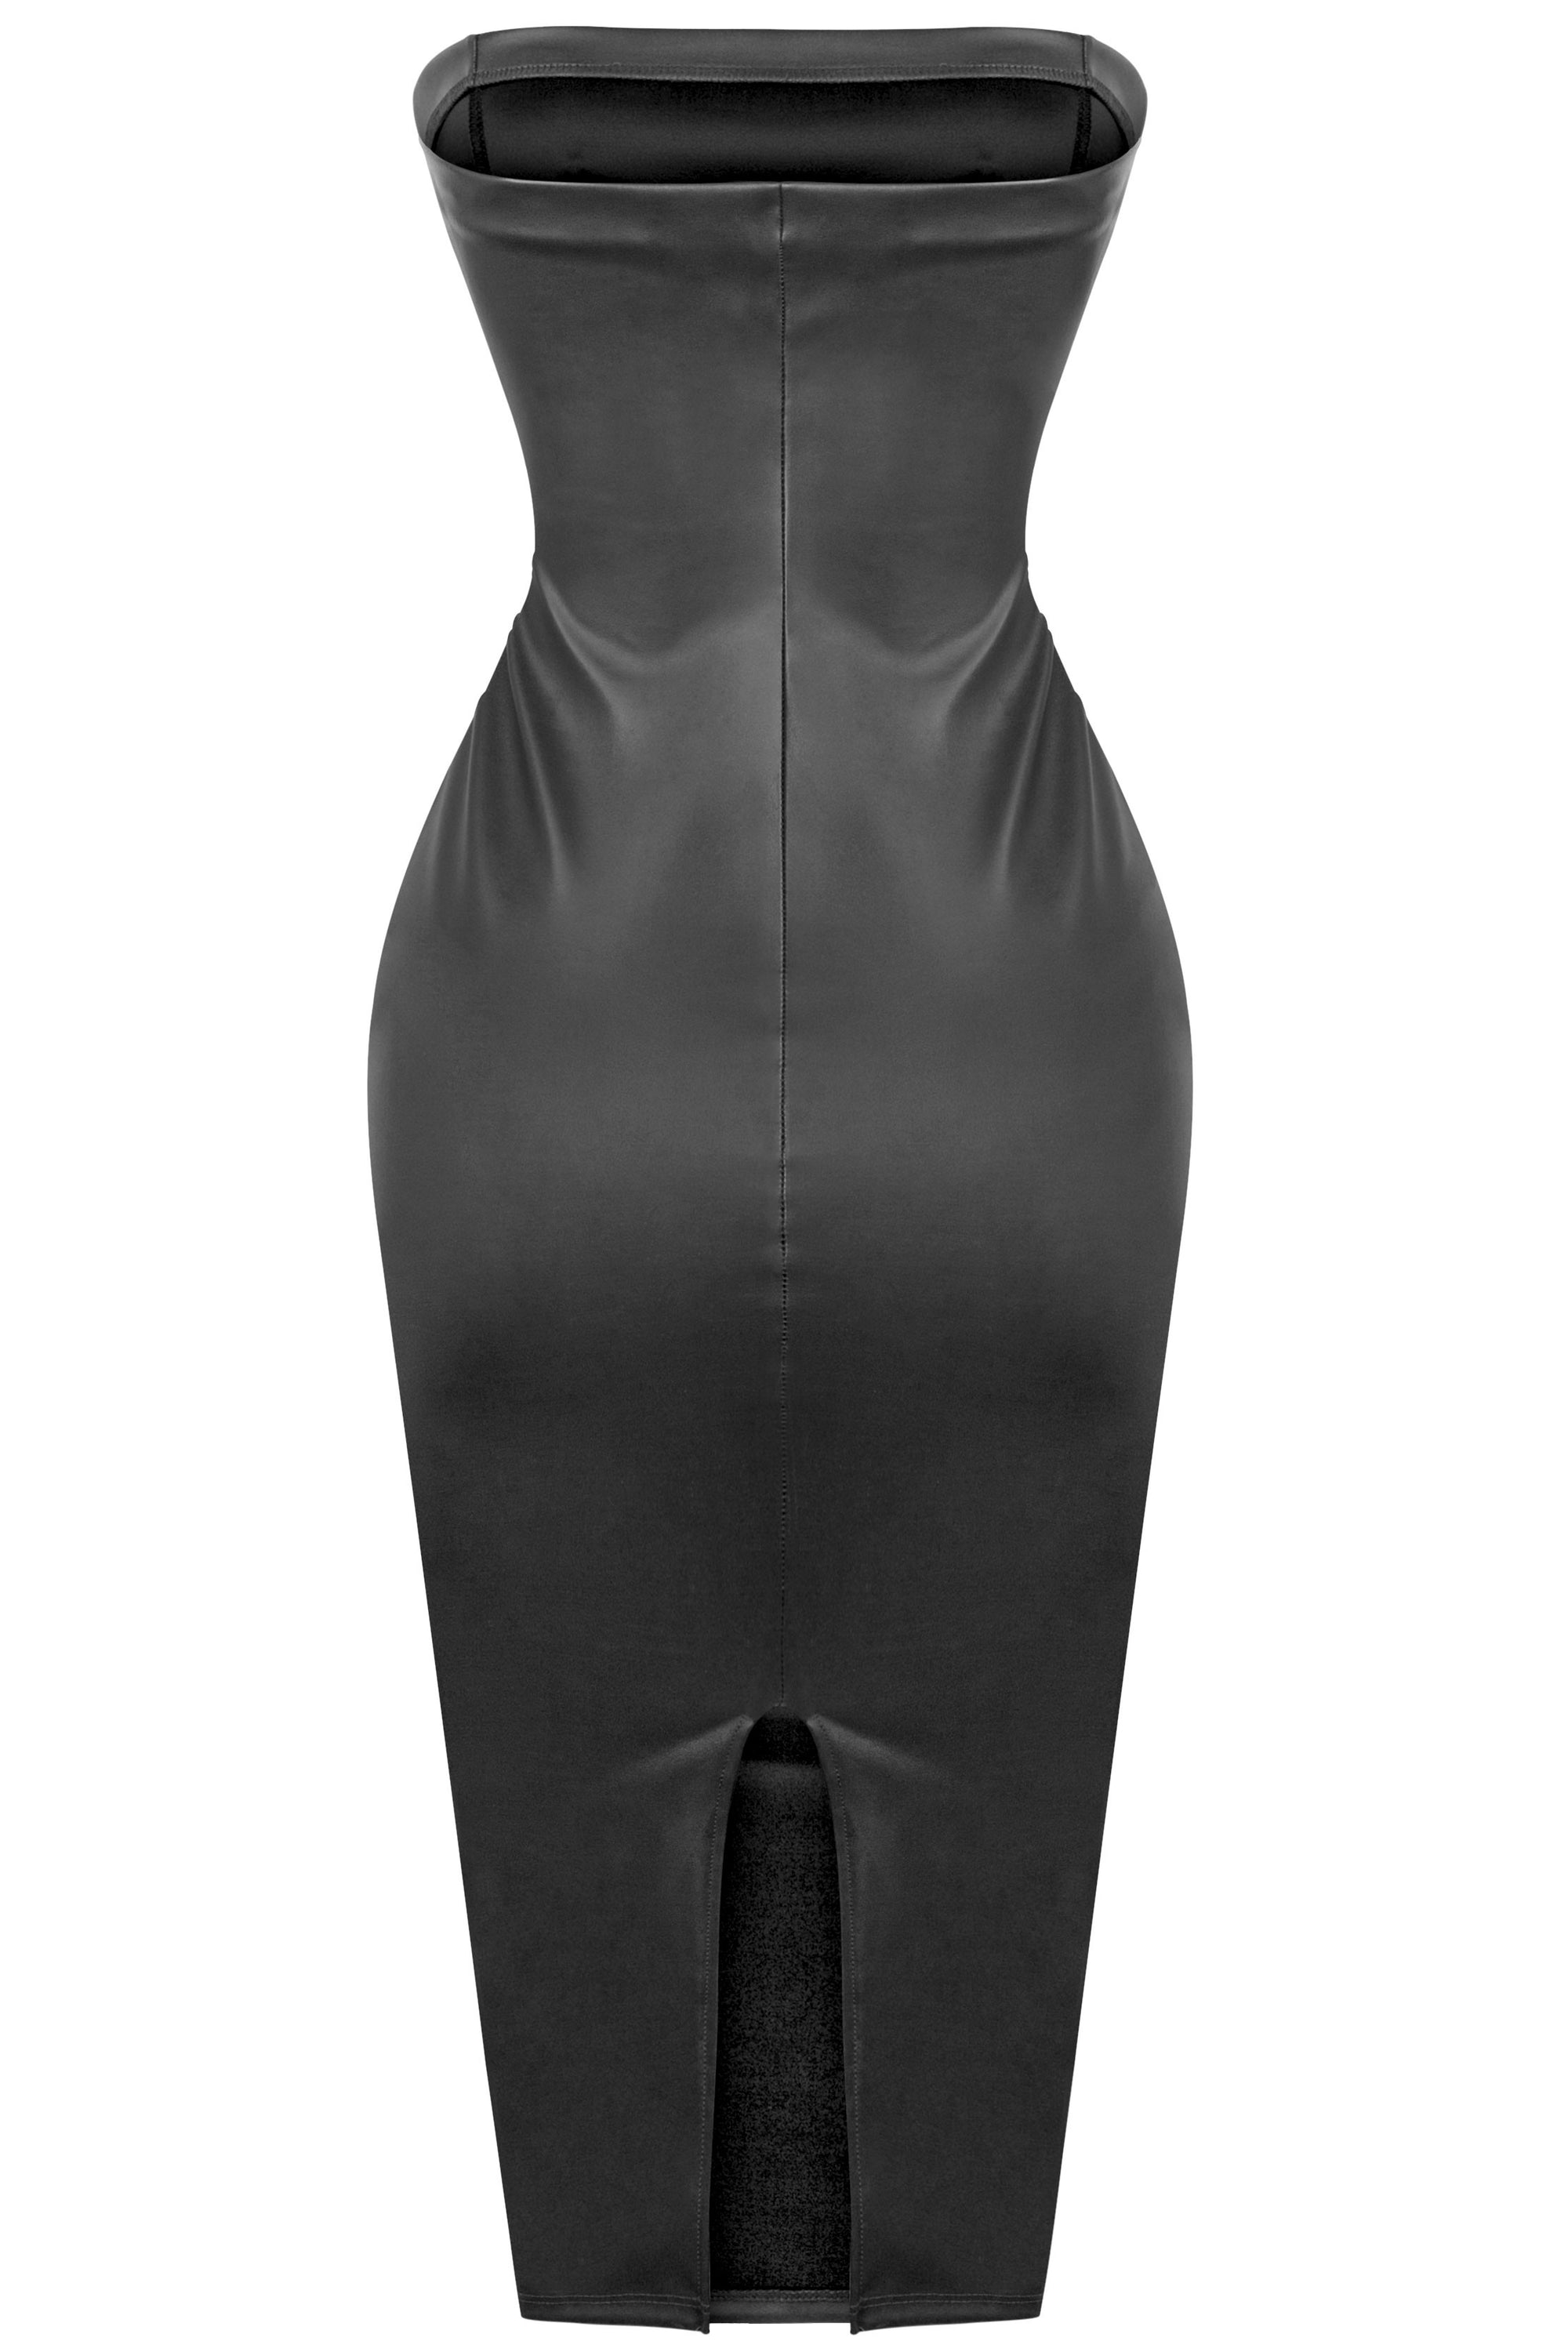 Black Tube Top Faux Leather Midi Dress - sosorella